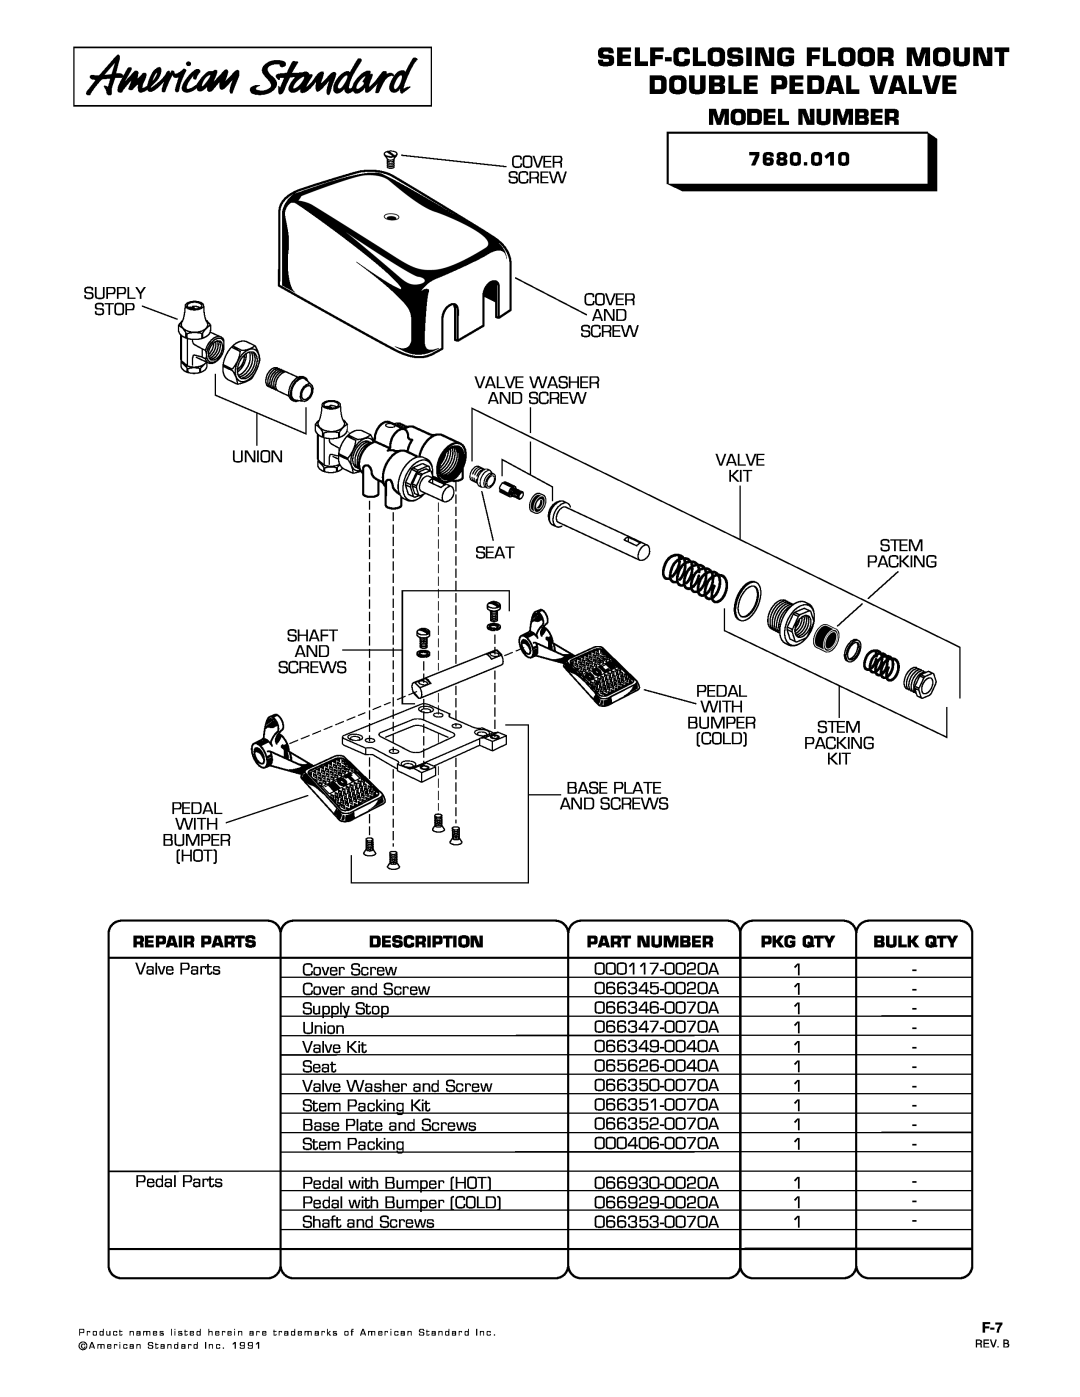 American Standard 7680.010 manual Self-Closingfloor Mount Double Pedal Valve, Model Number, Repair Parts, Description 